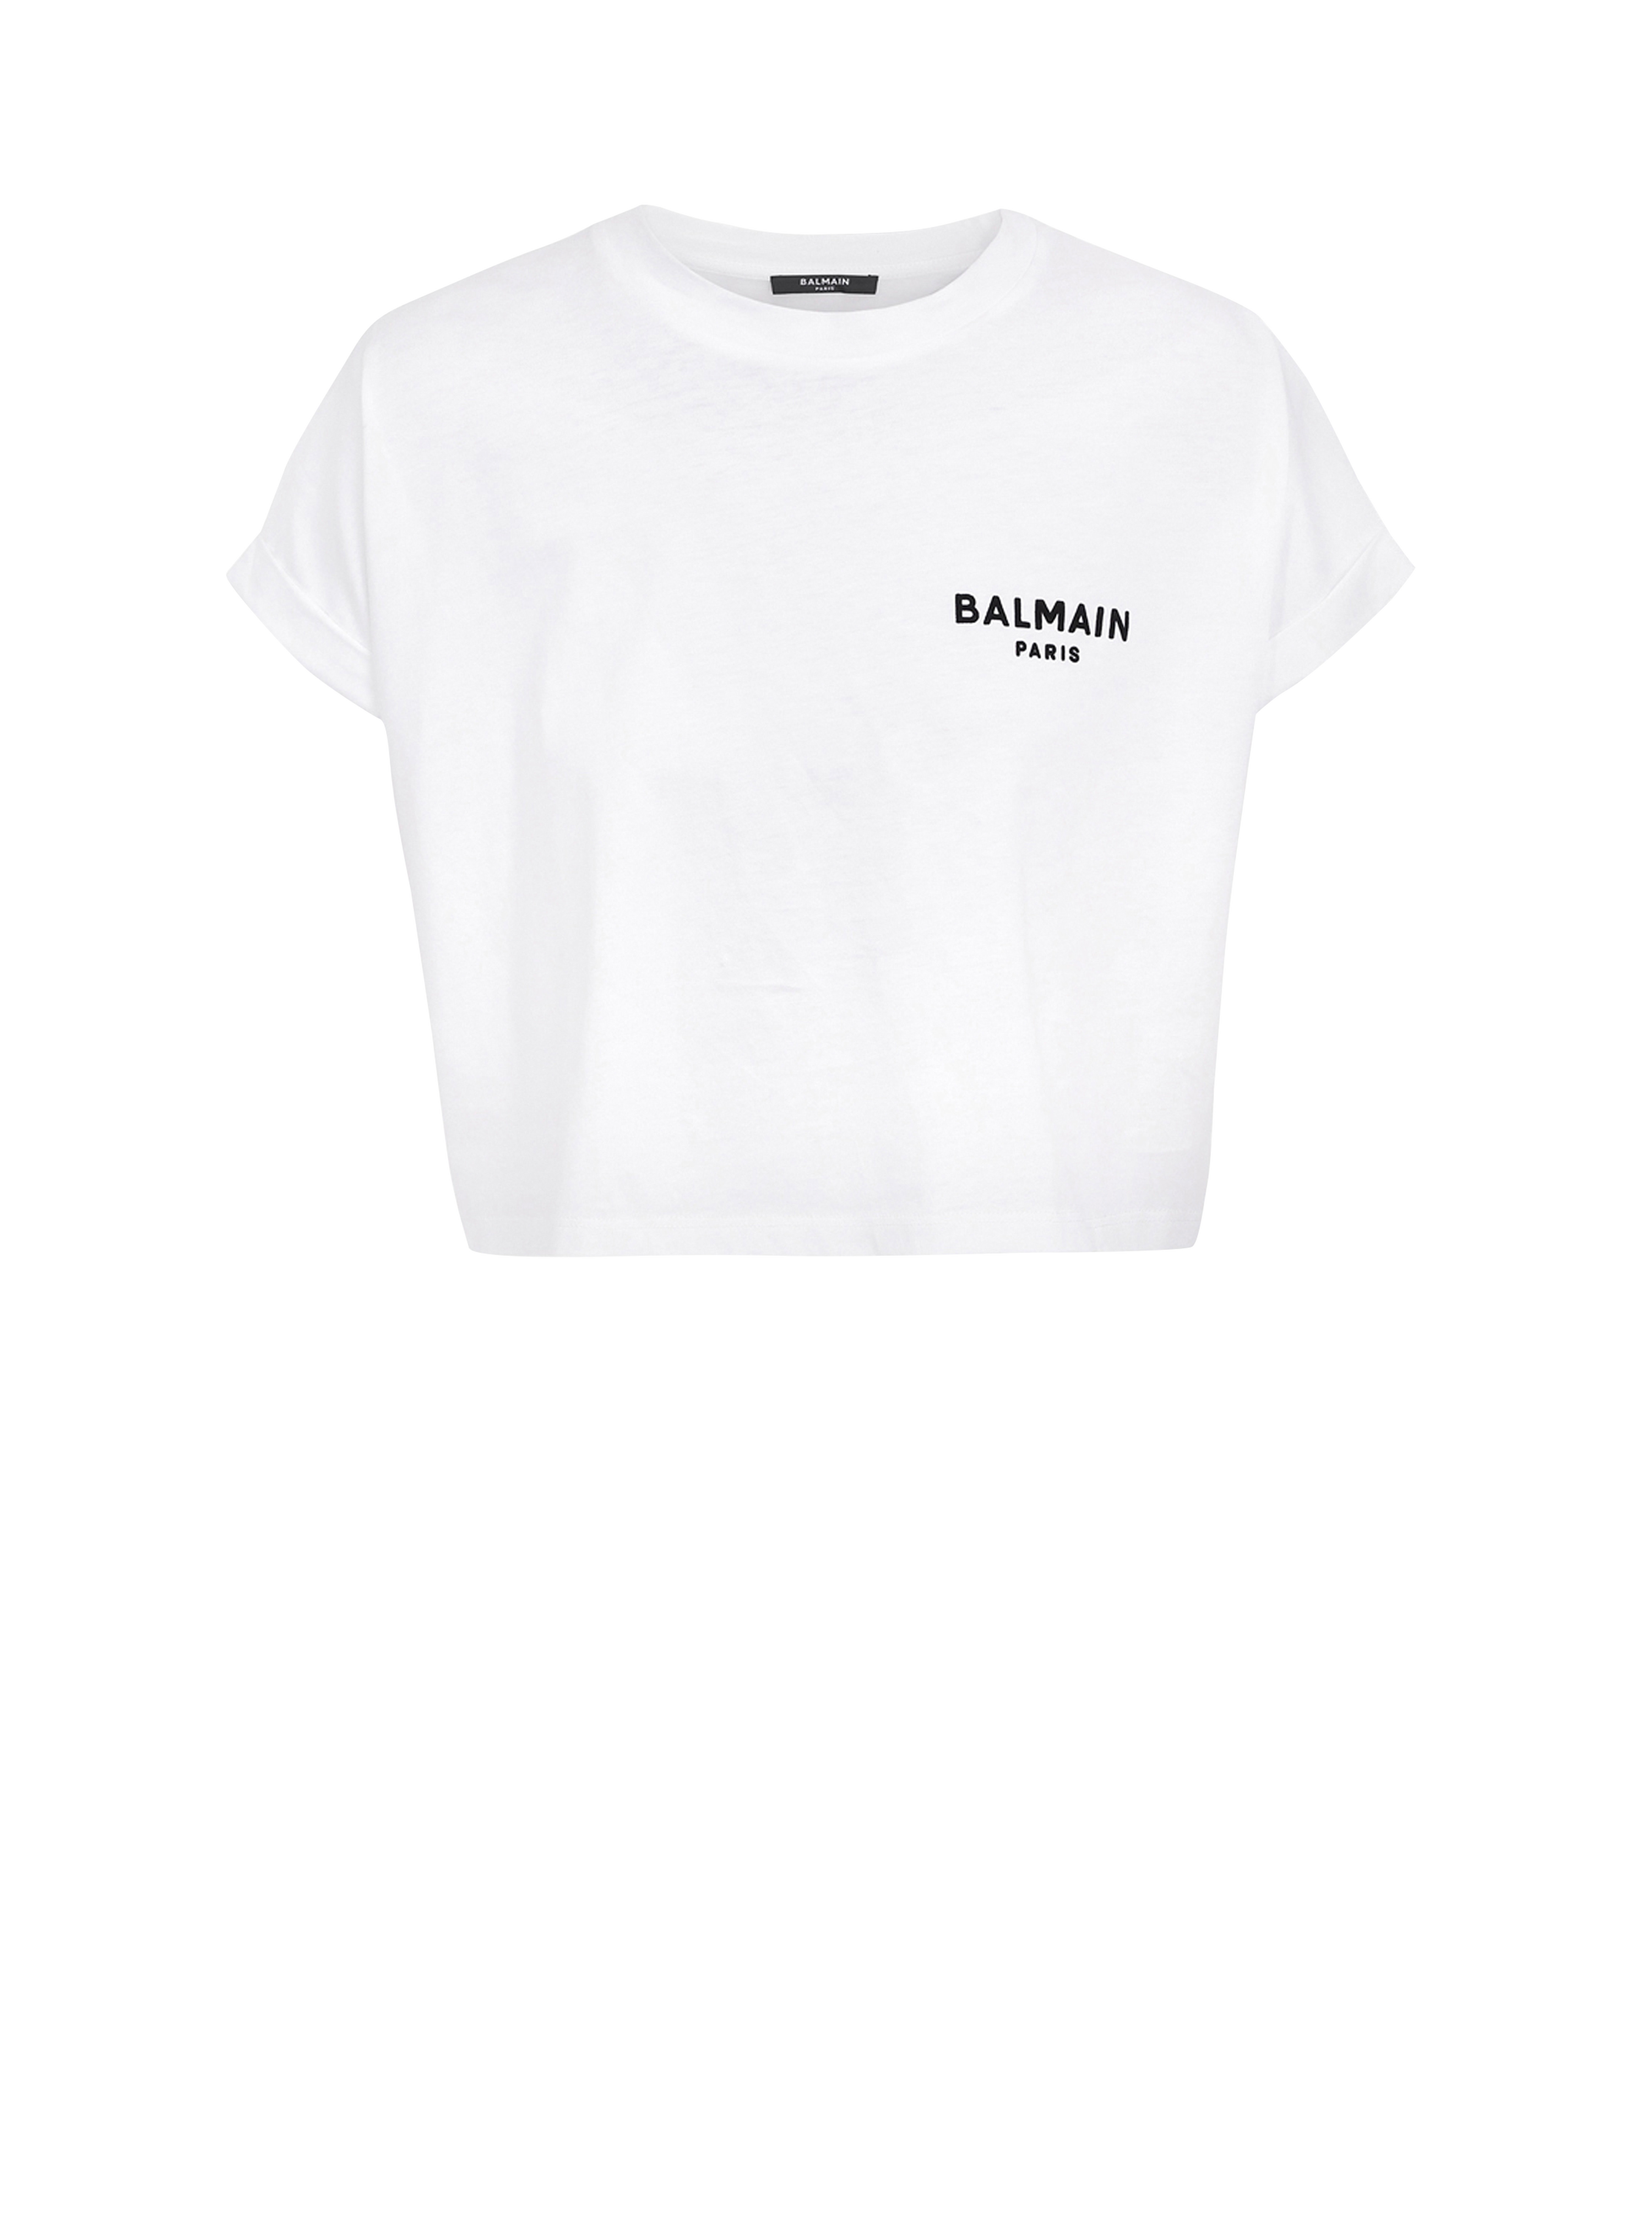 Camiseta corta de algodón con logotipo pequeño de Balmain flocado, blanco